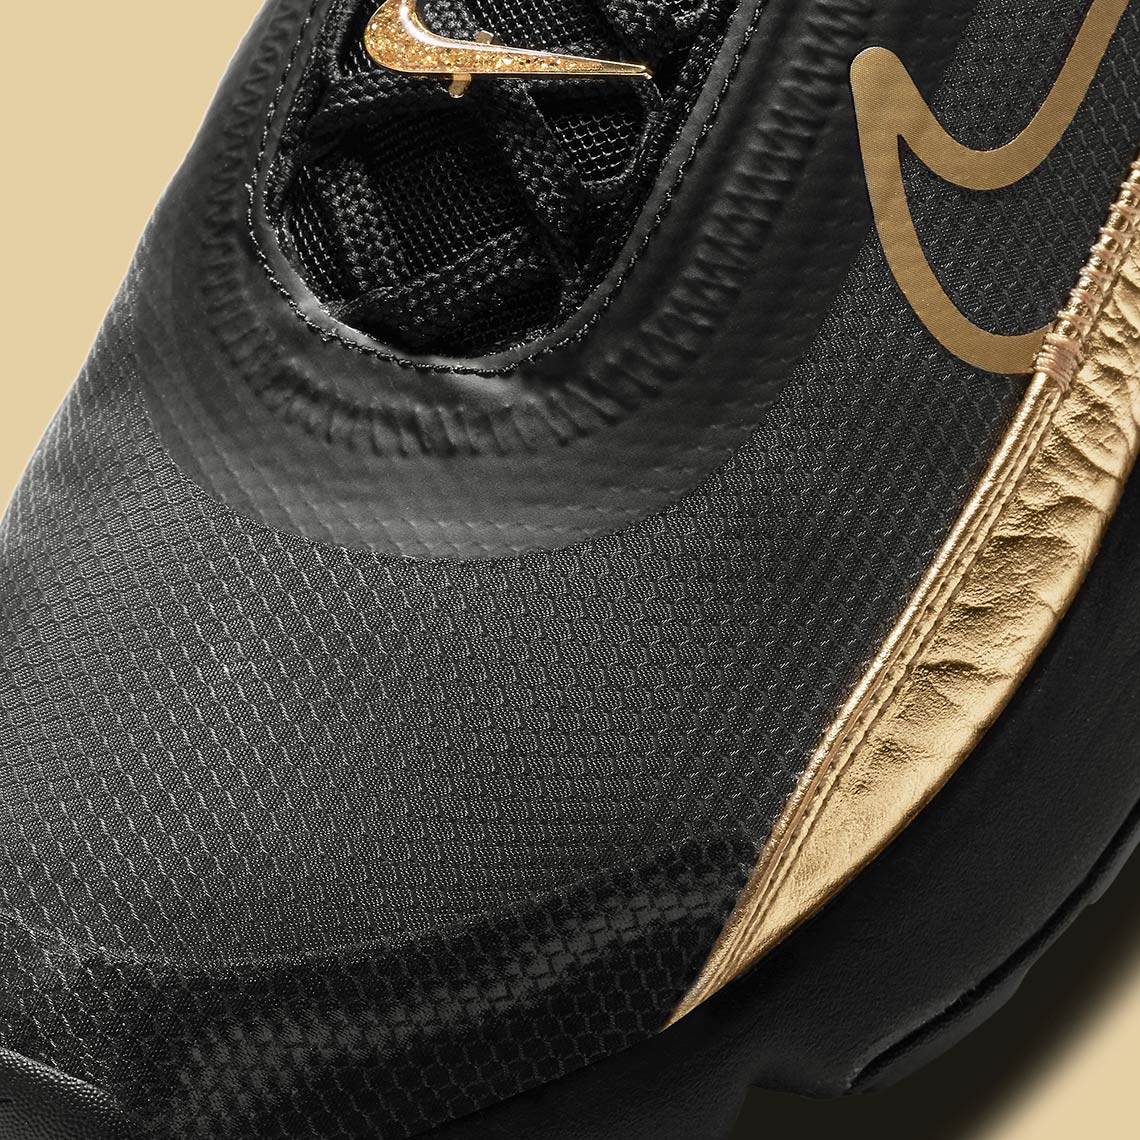 Nike Air Max 2090 Metallic Gold DC2191-001 Release Date | SneakerNews.com